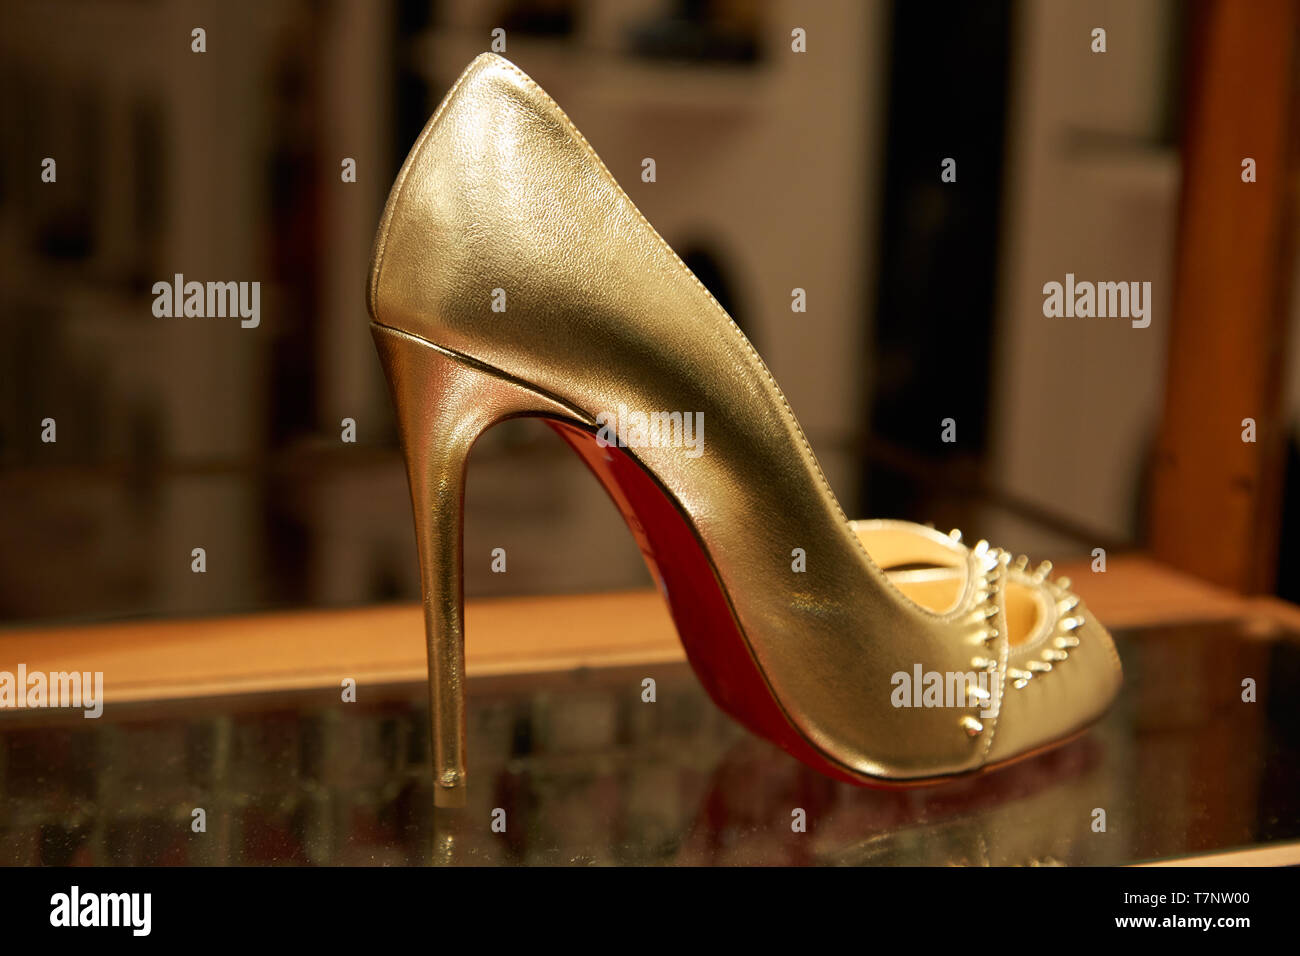 Amante del calzado? Estos son los modelos más caros e icónicos de Christian  Louboutin